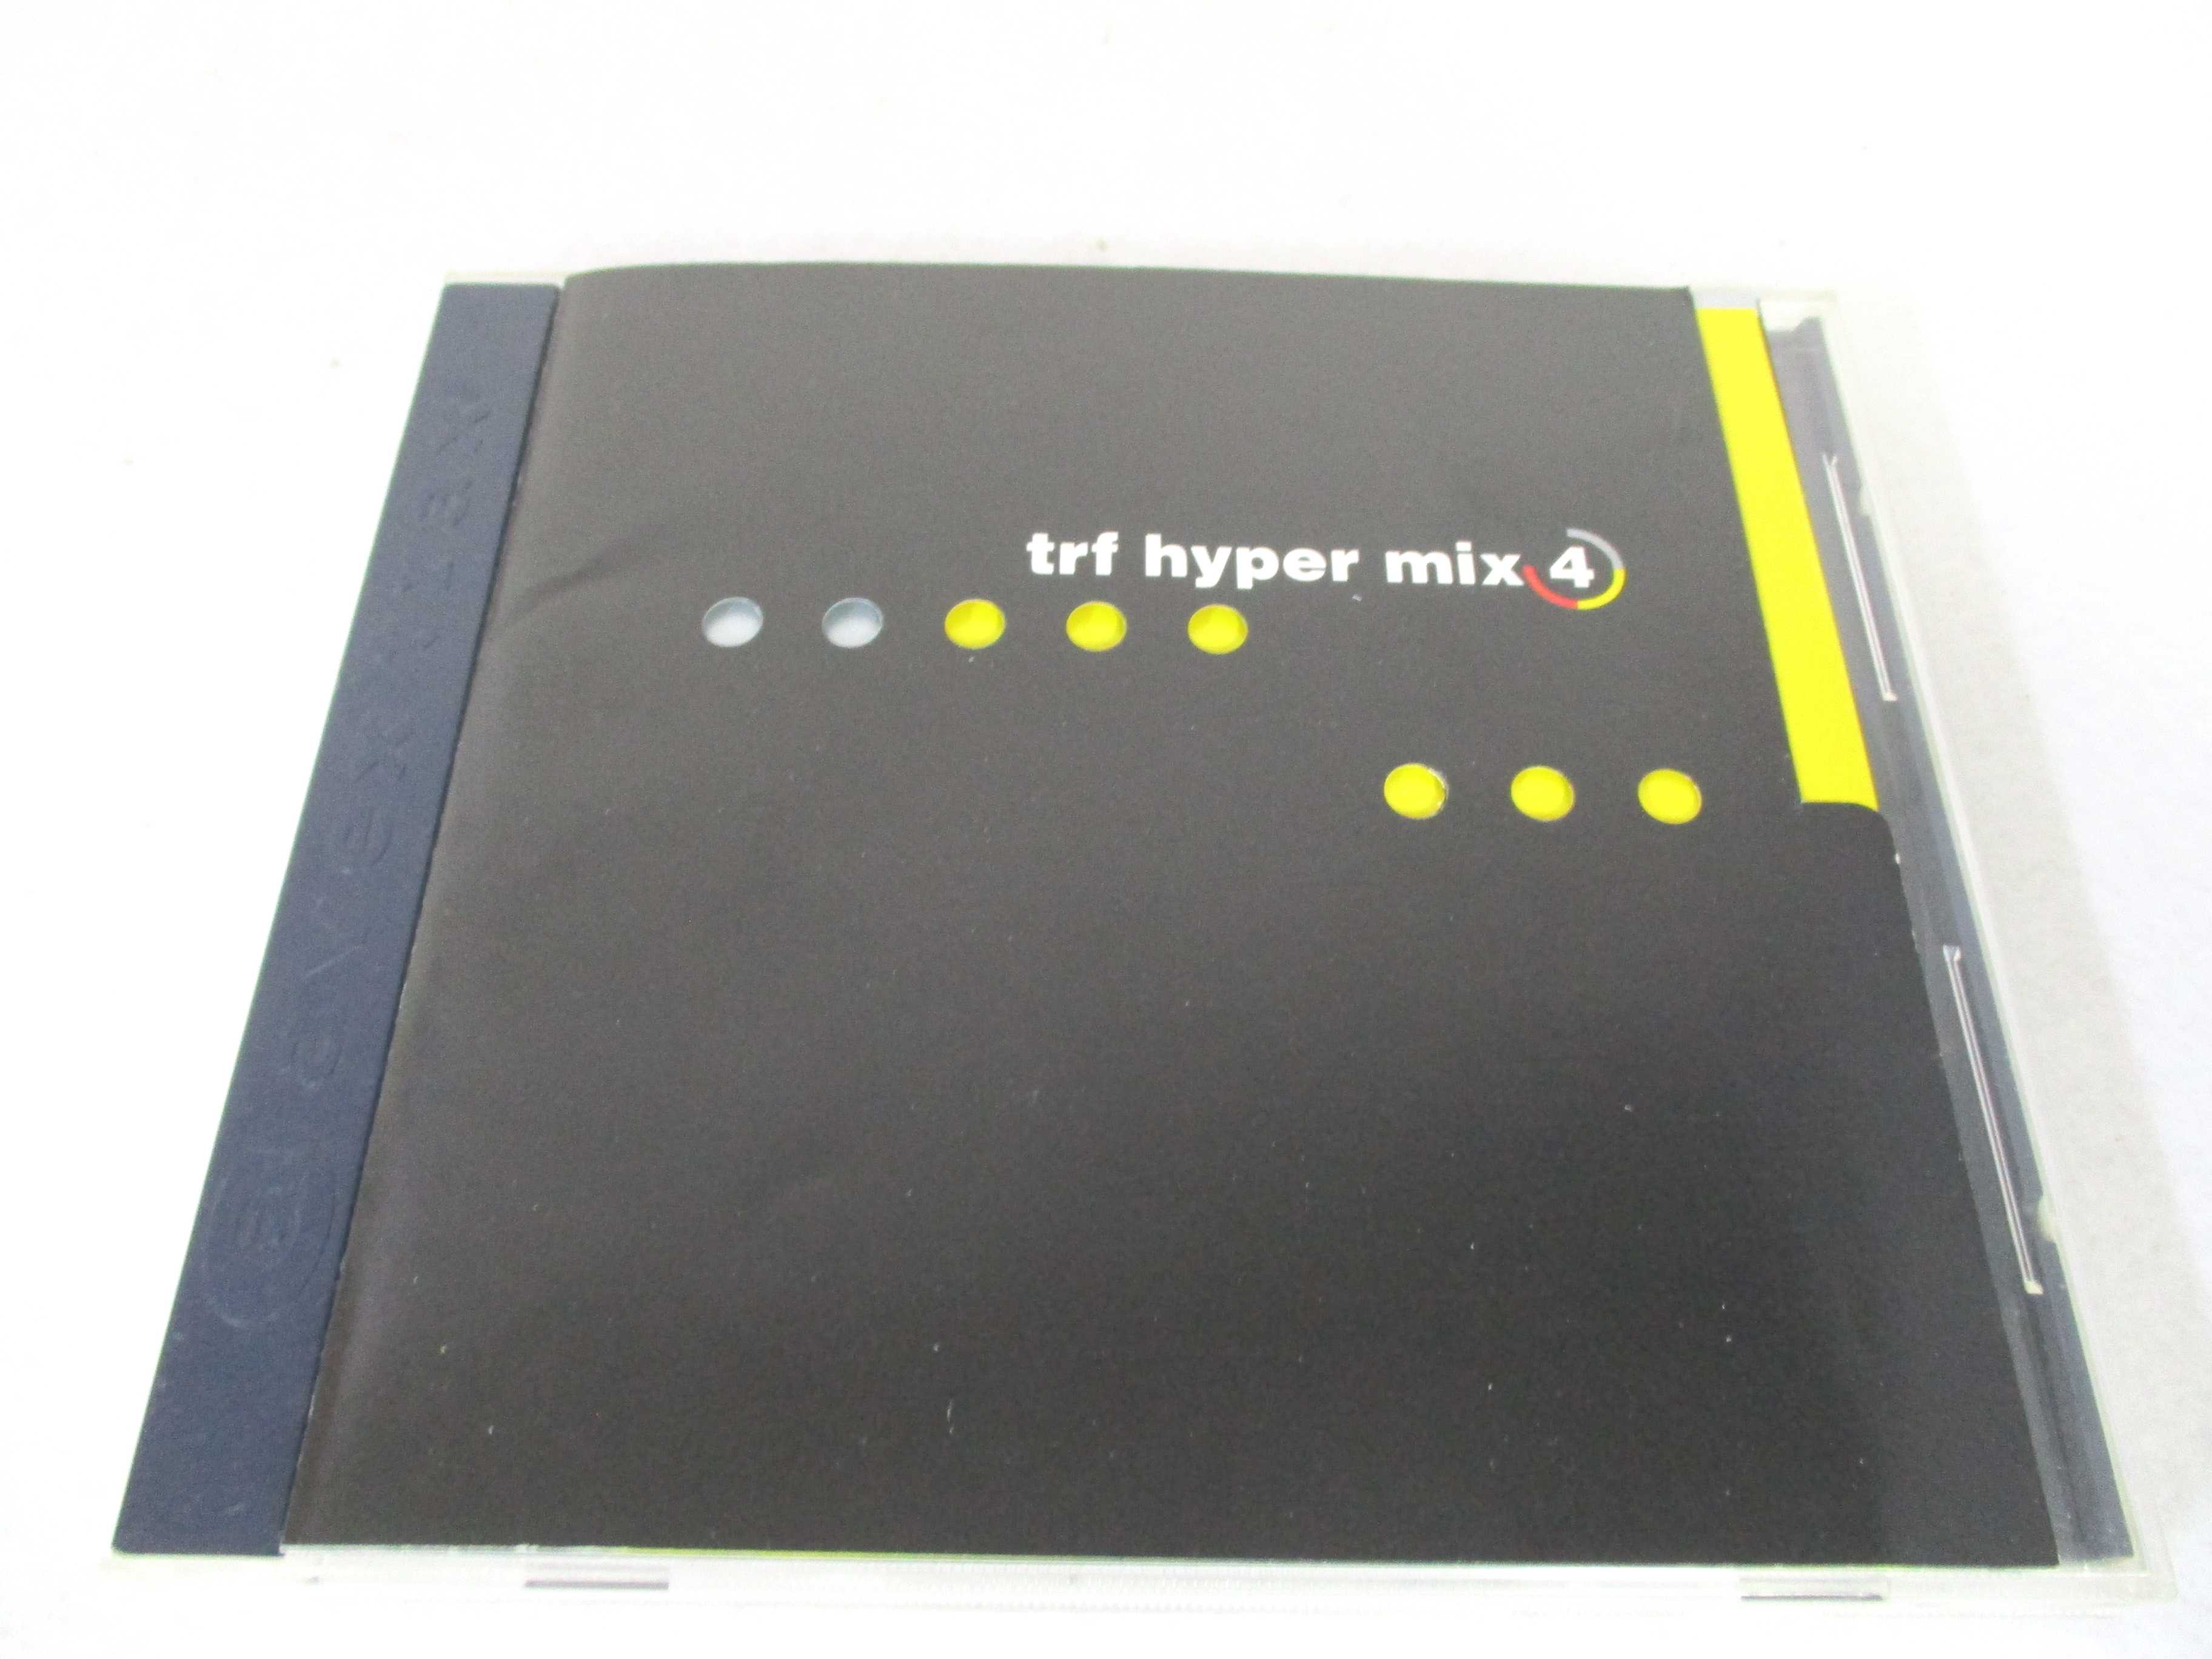 AC02440 【中古】 【CD】 hyper mix 4/trf